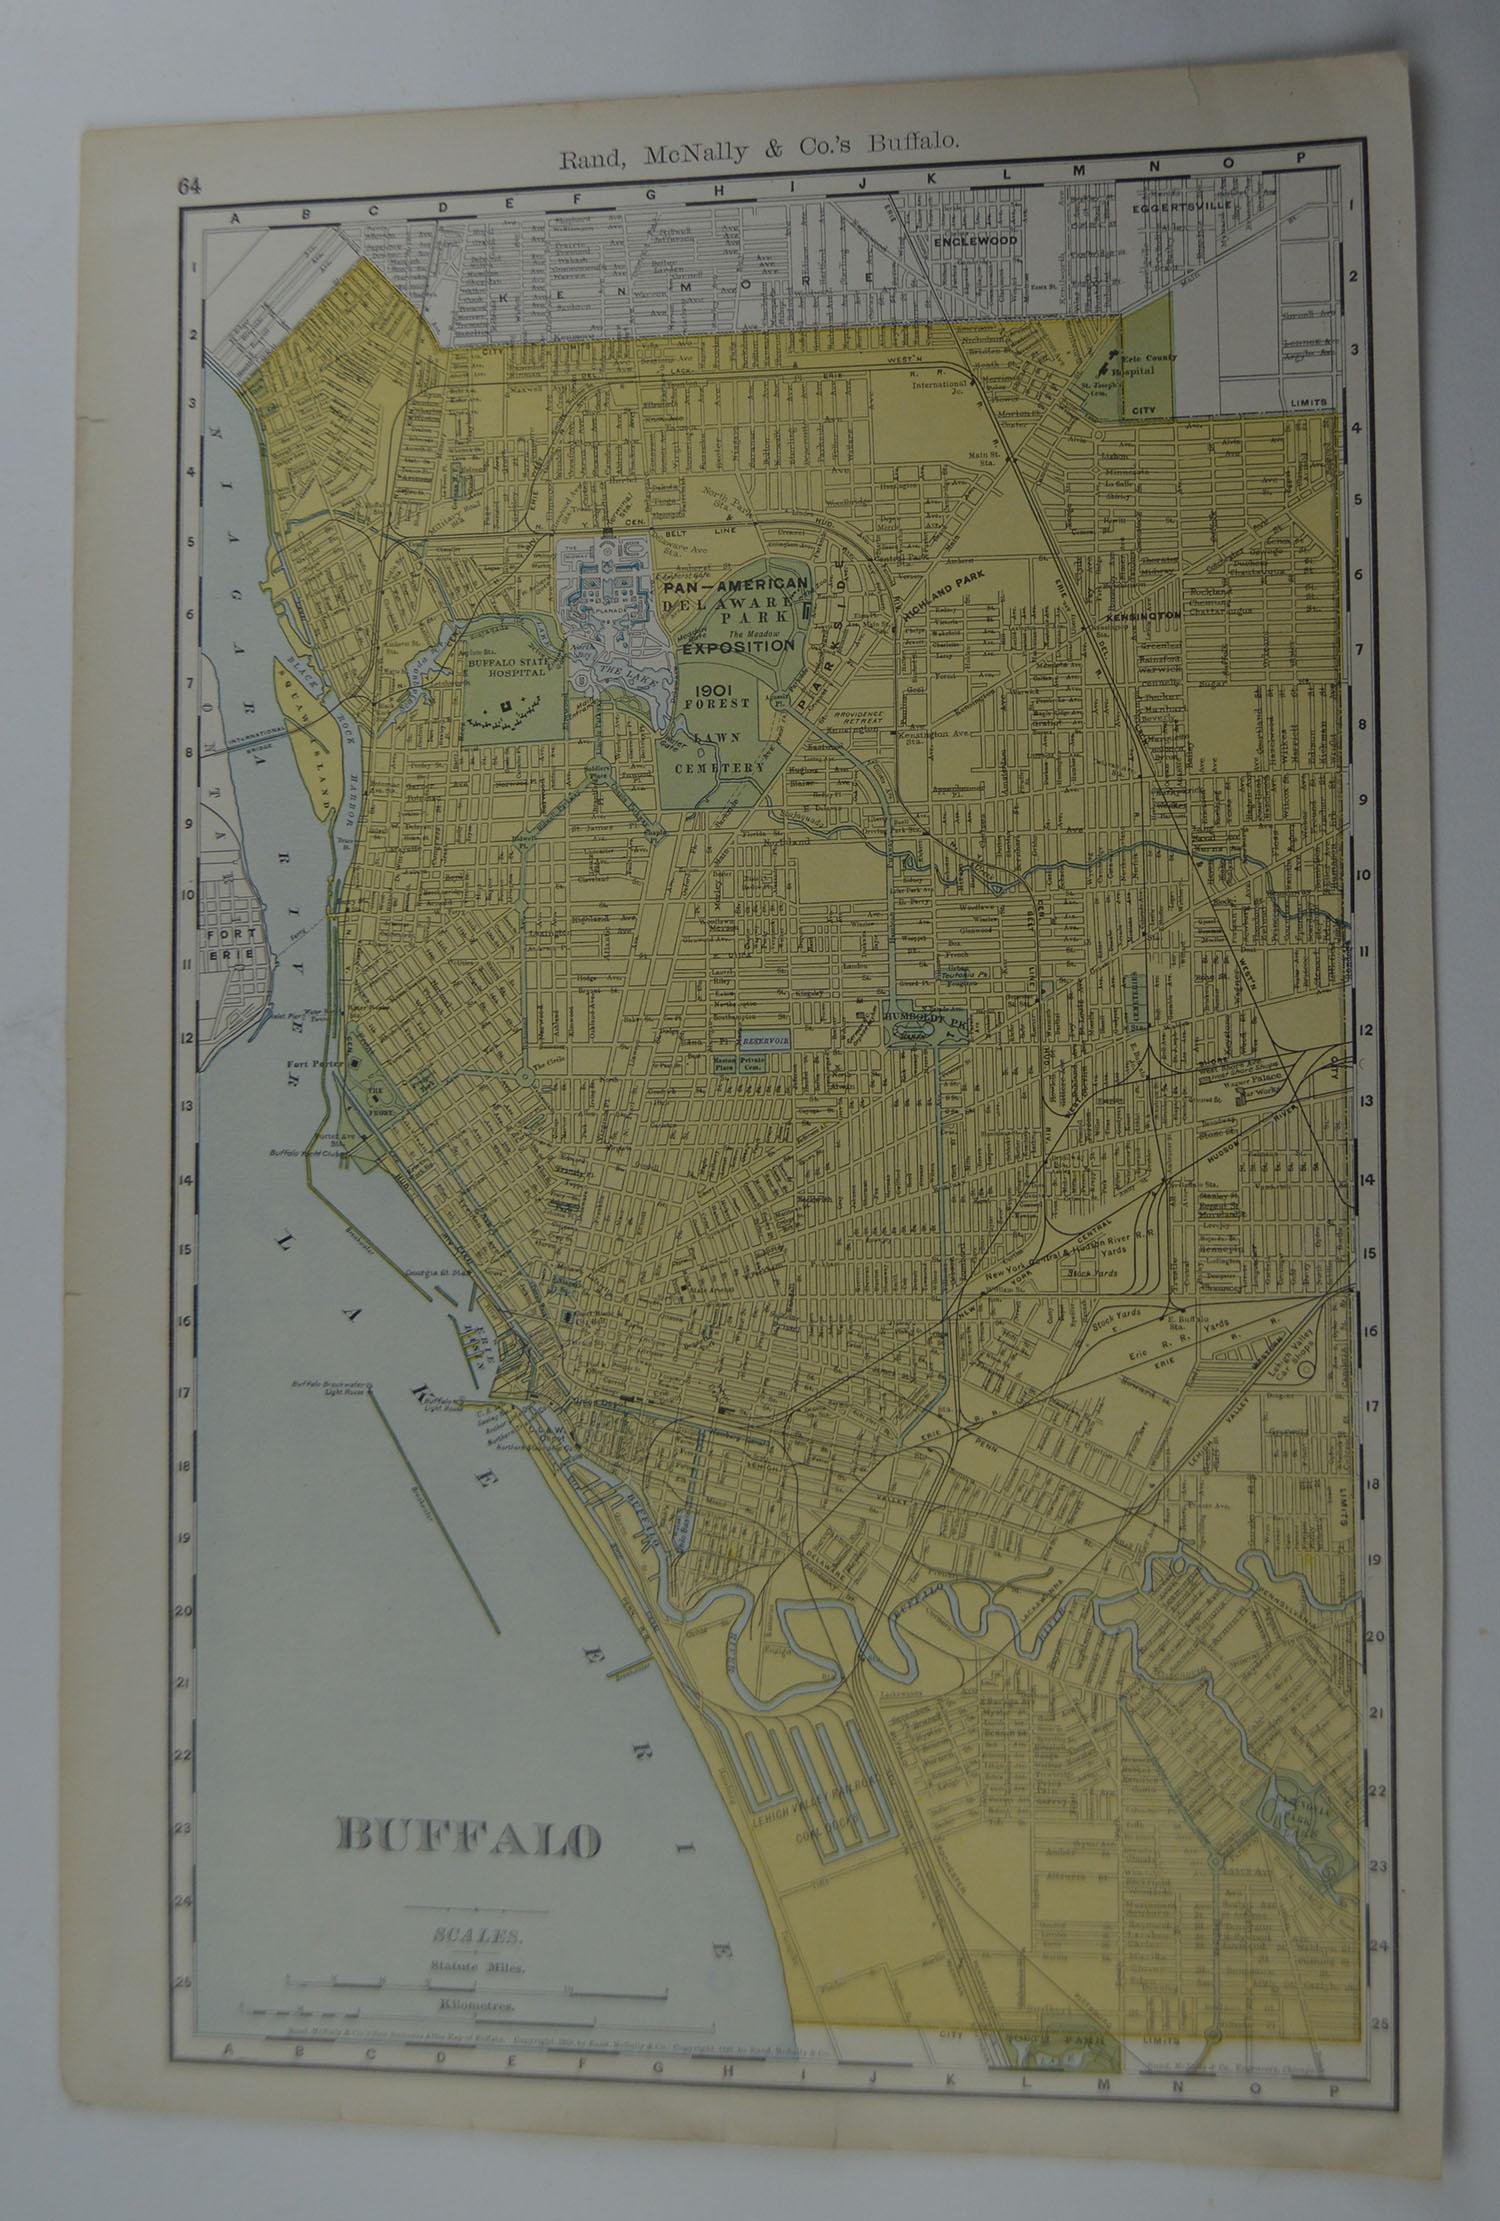 Autre Plan de ville ancien original de Buffalo, New York, États-Unis, datant d'environ 1900 en vente